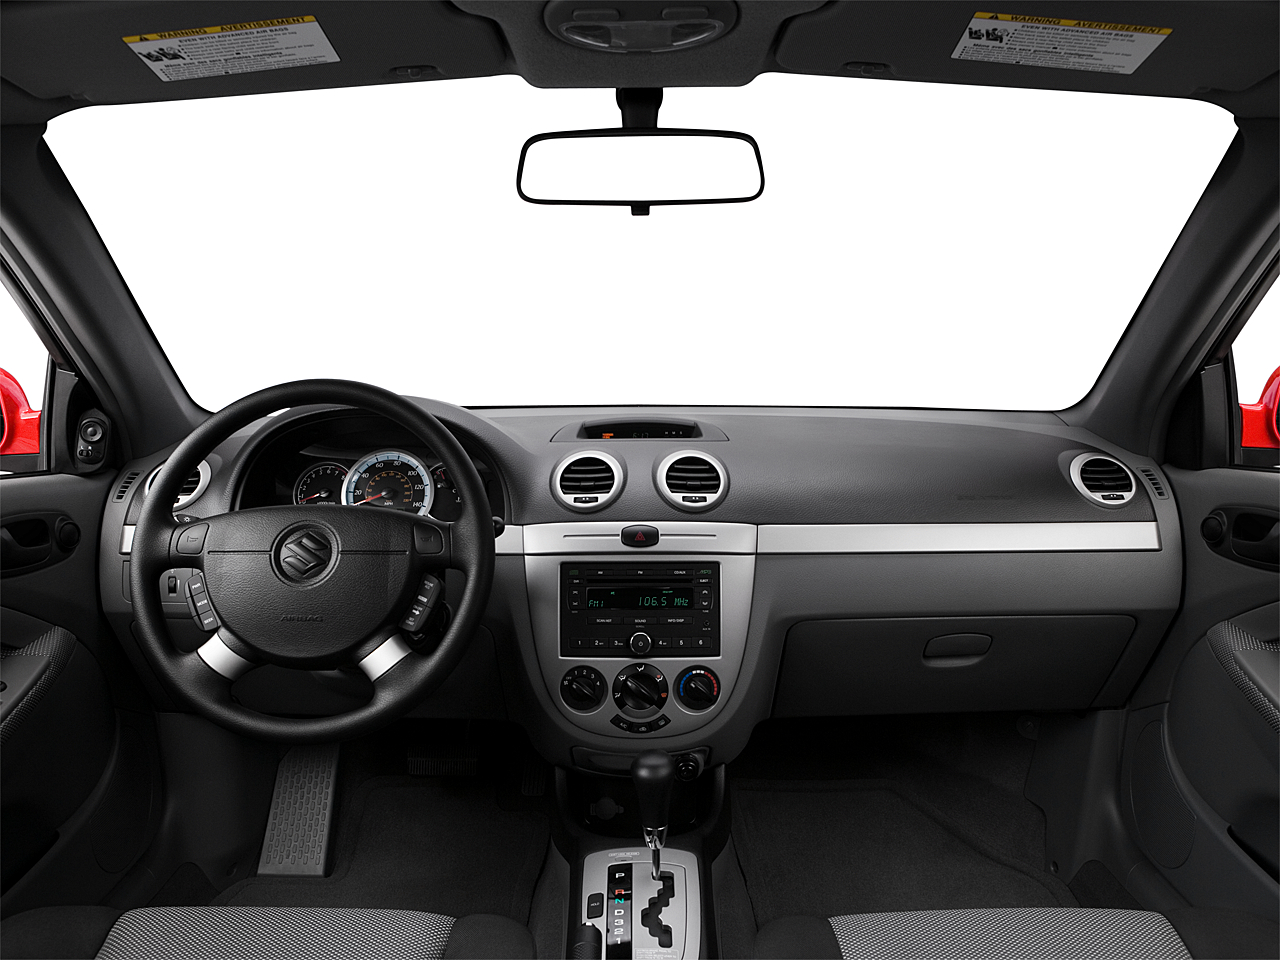 2008 Suzuki Reno 4dr Hatchback w/Convenience Package (2L I4 4A) - Research  - GrooveCar